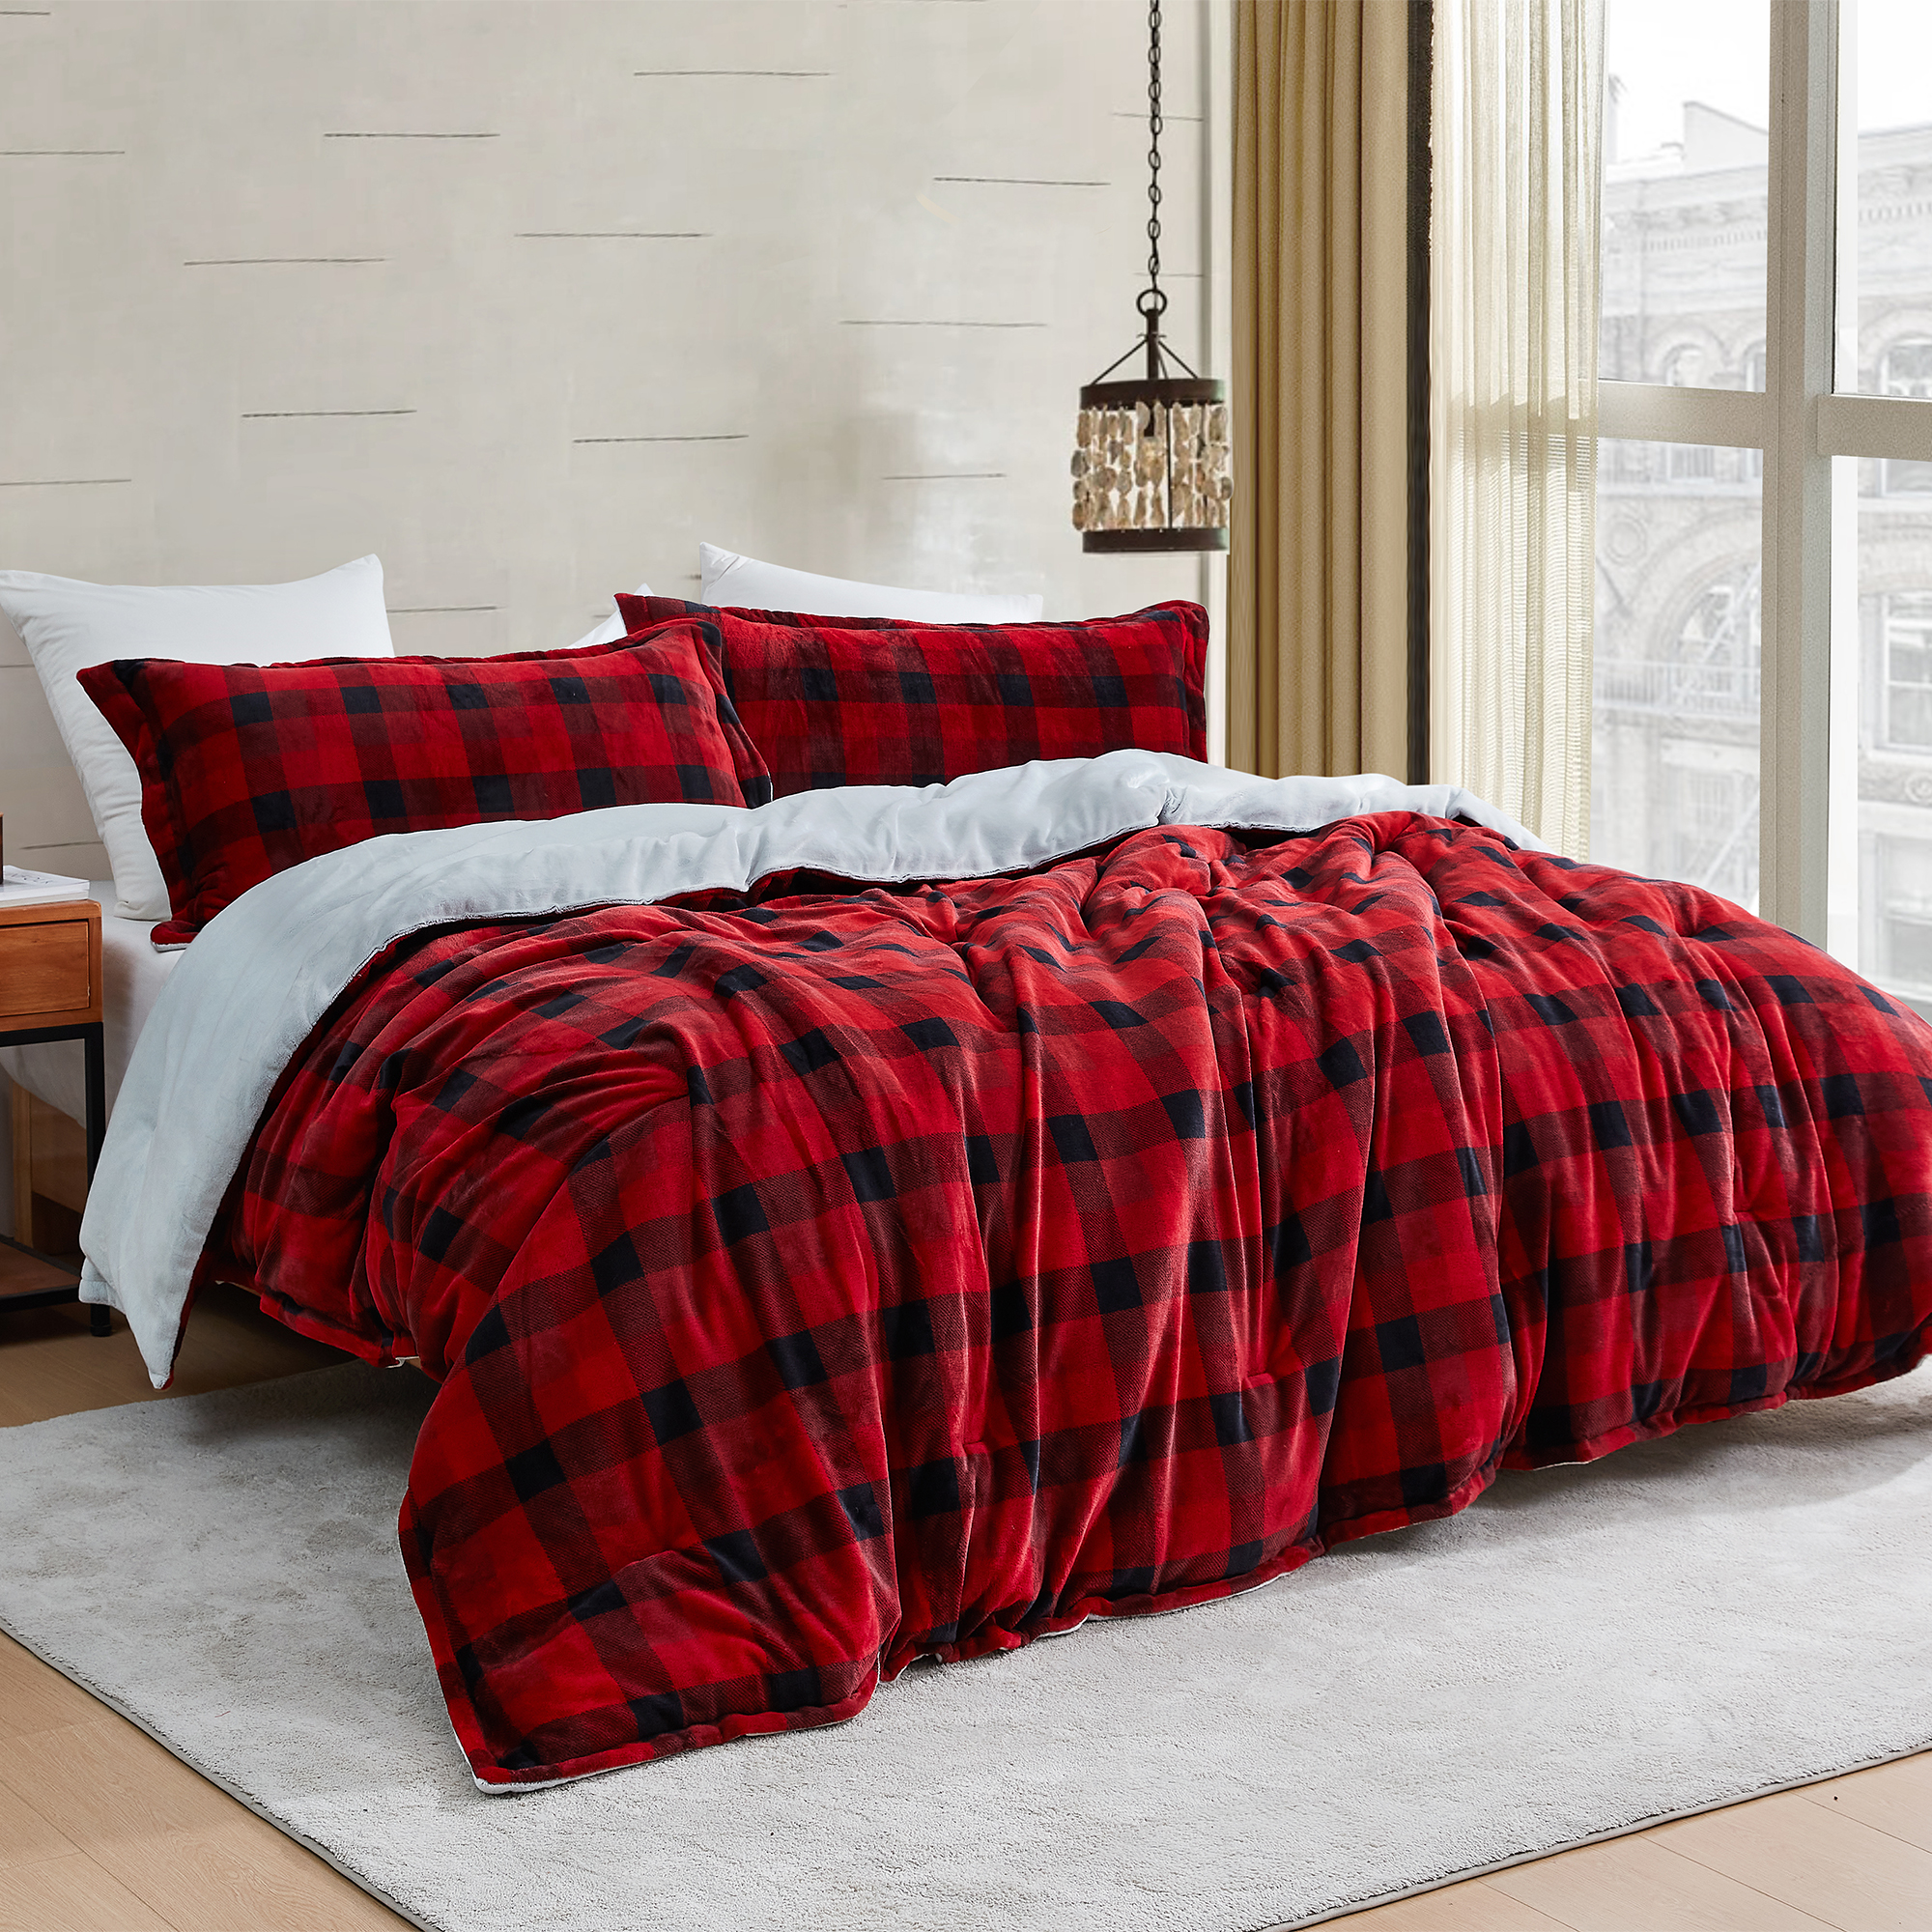 Ah, Yes The Scottish Winter - Coma Inducer Oversized Comforter - Buffalo Plaid